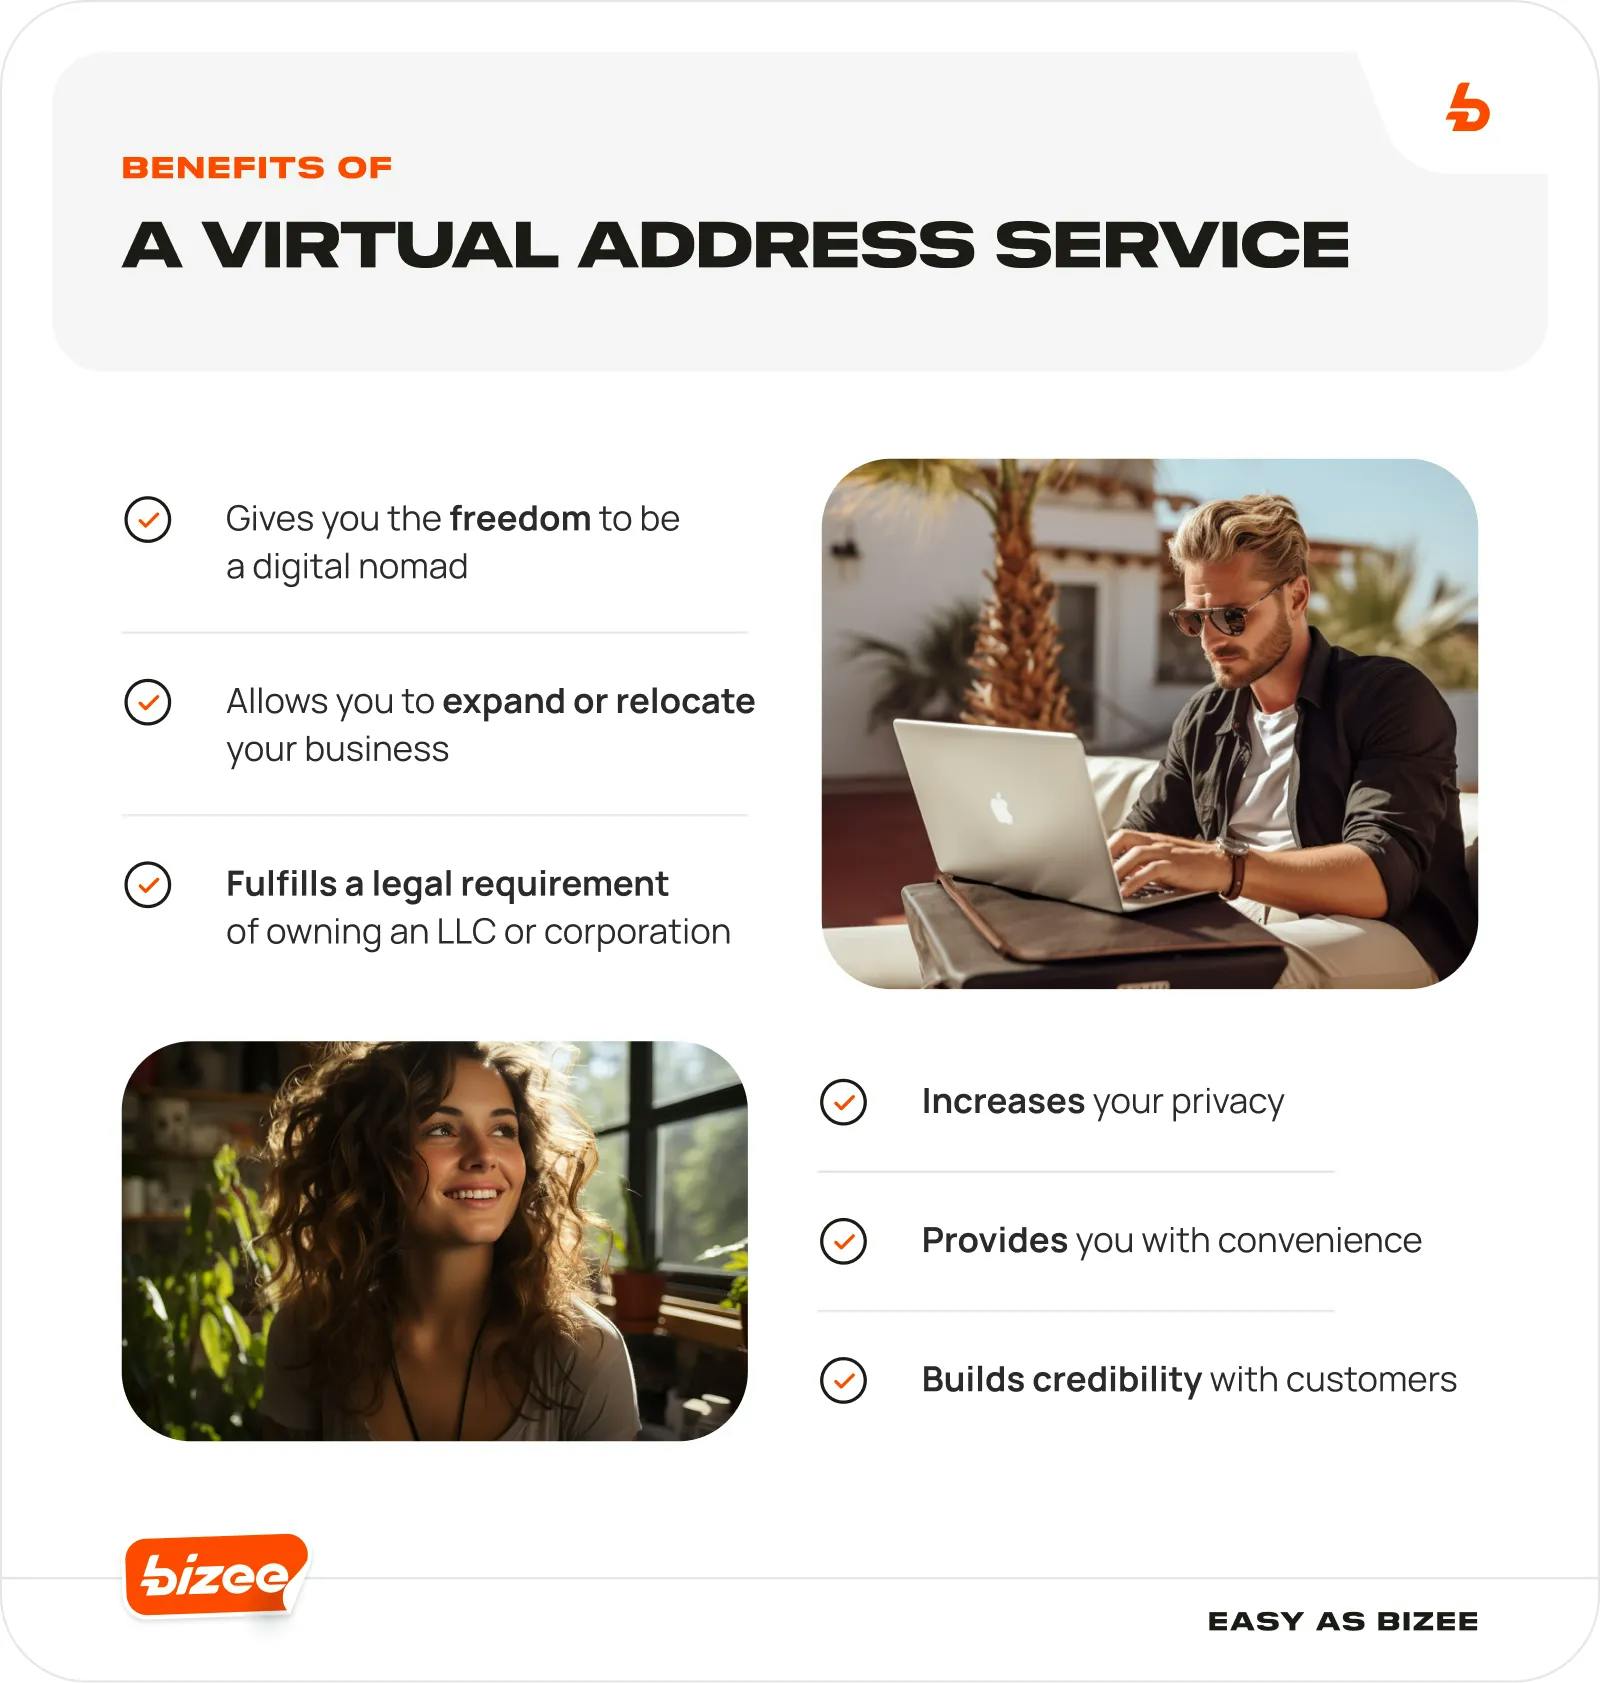 Bizee virtual address service benefits infographic